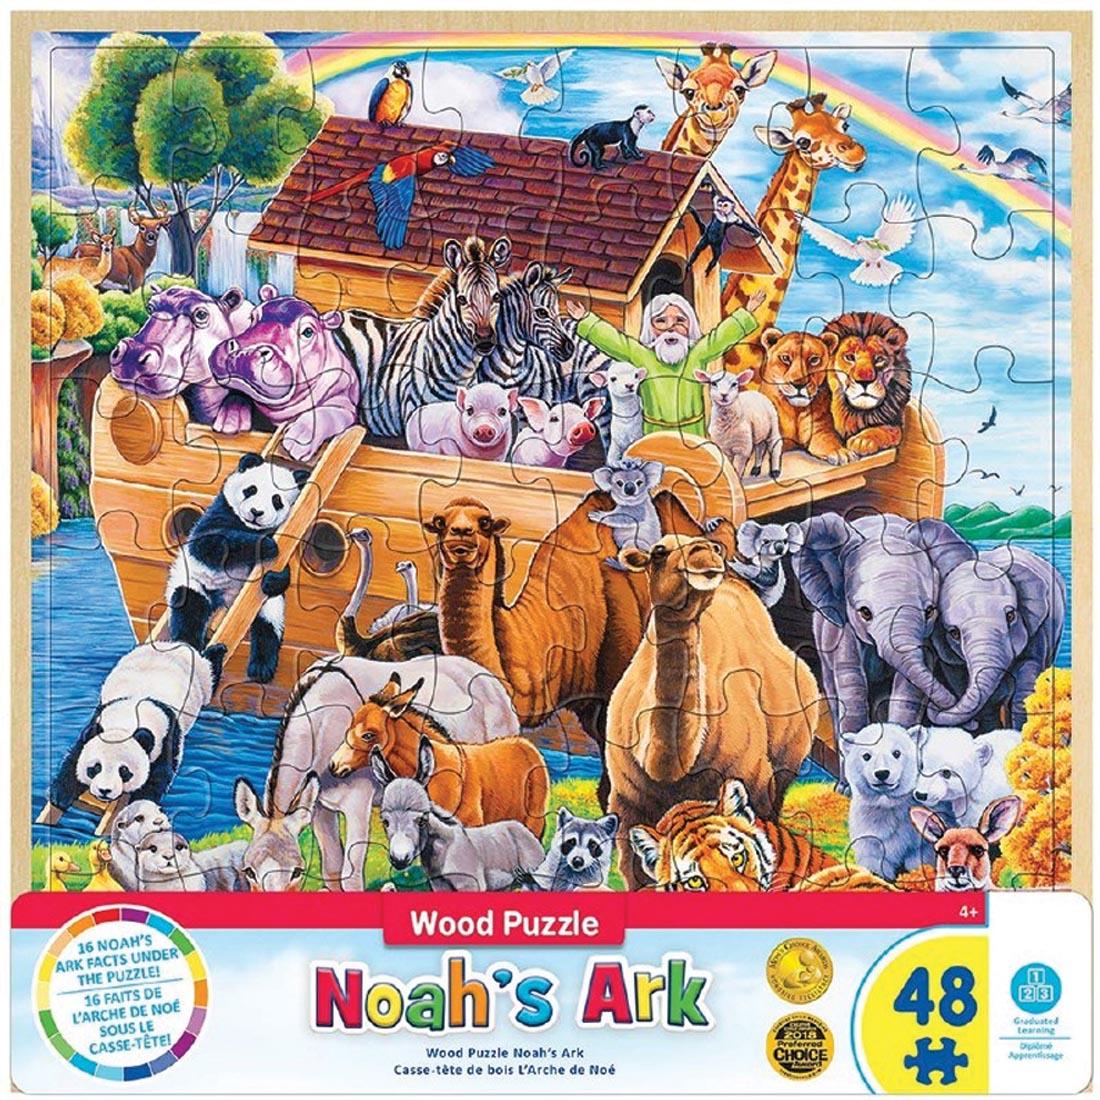 Noah's Ark 48-Piece Wooden Puzzle By MasterPieces